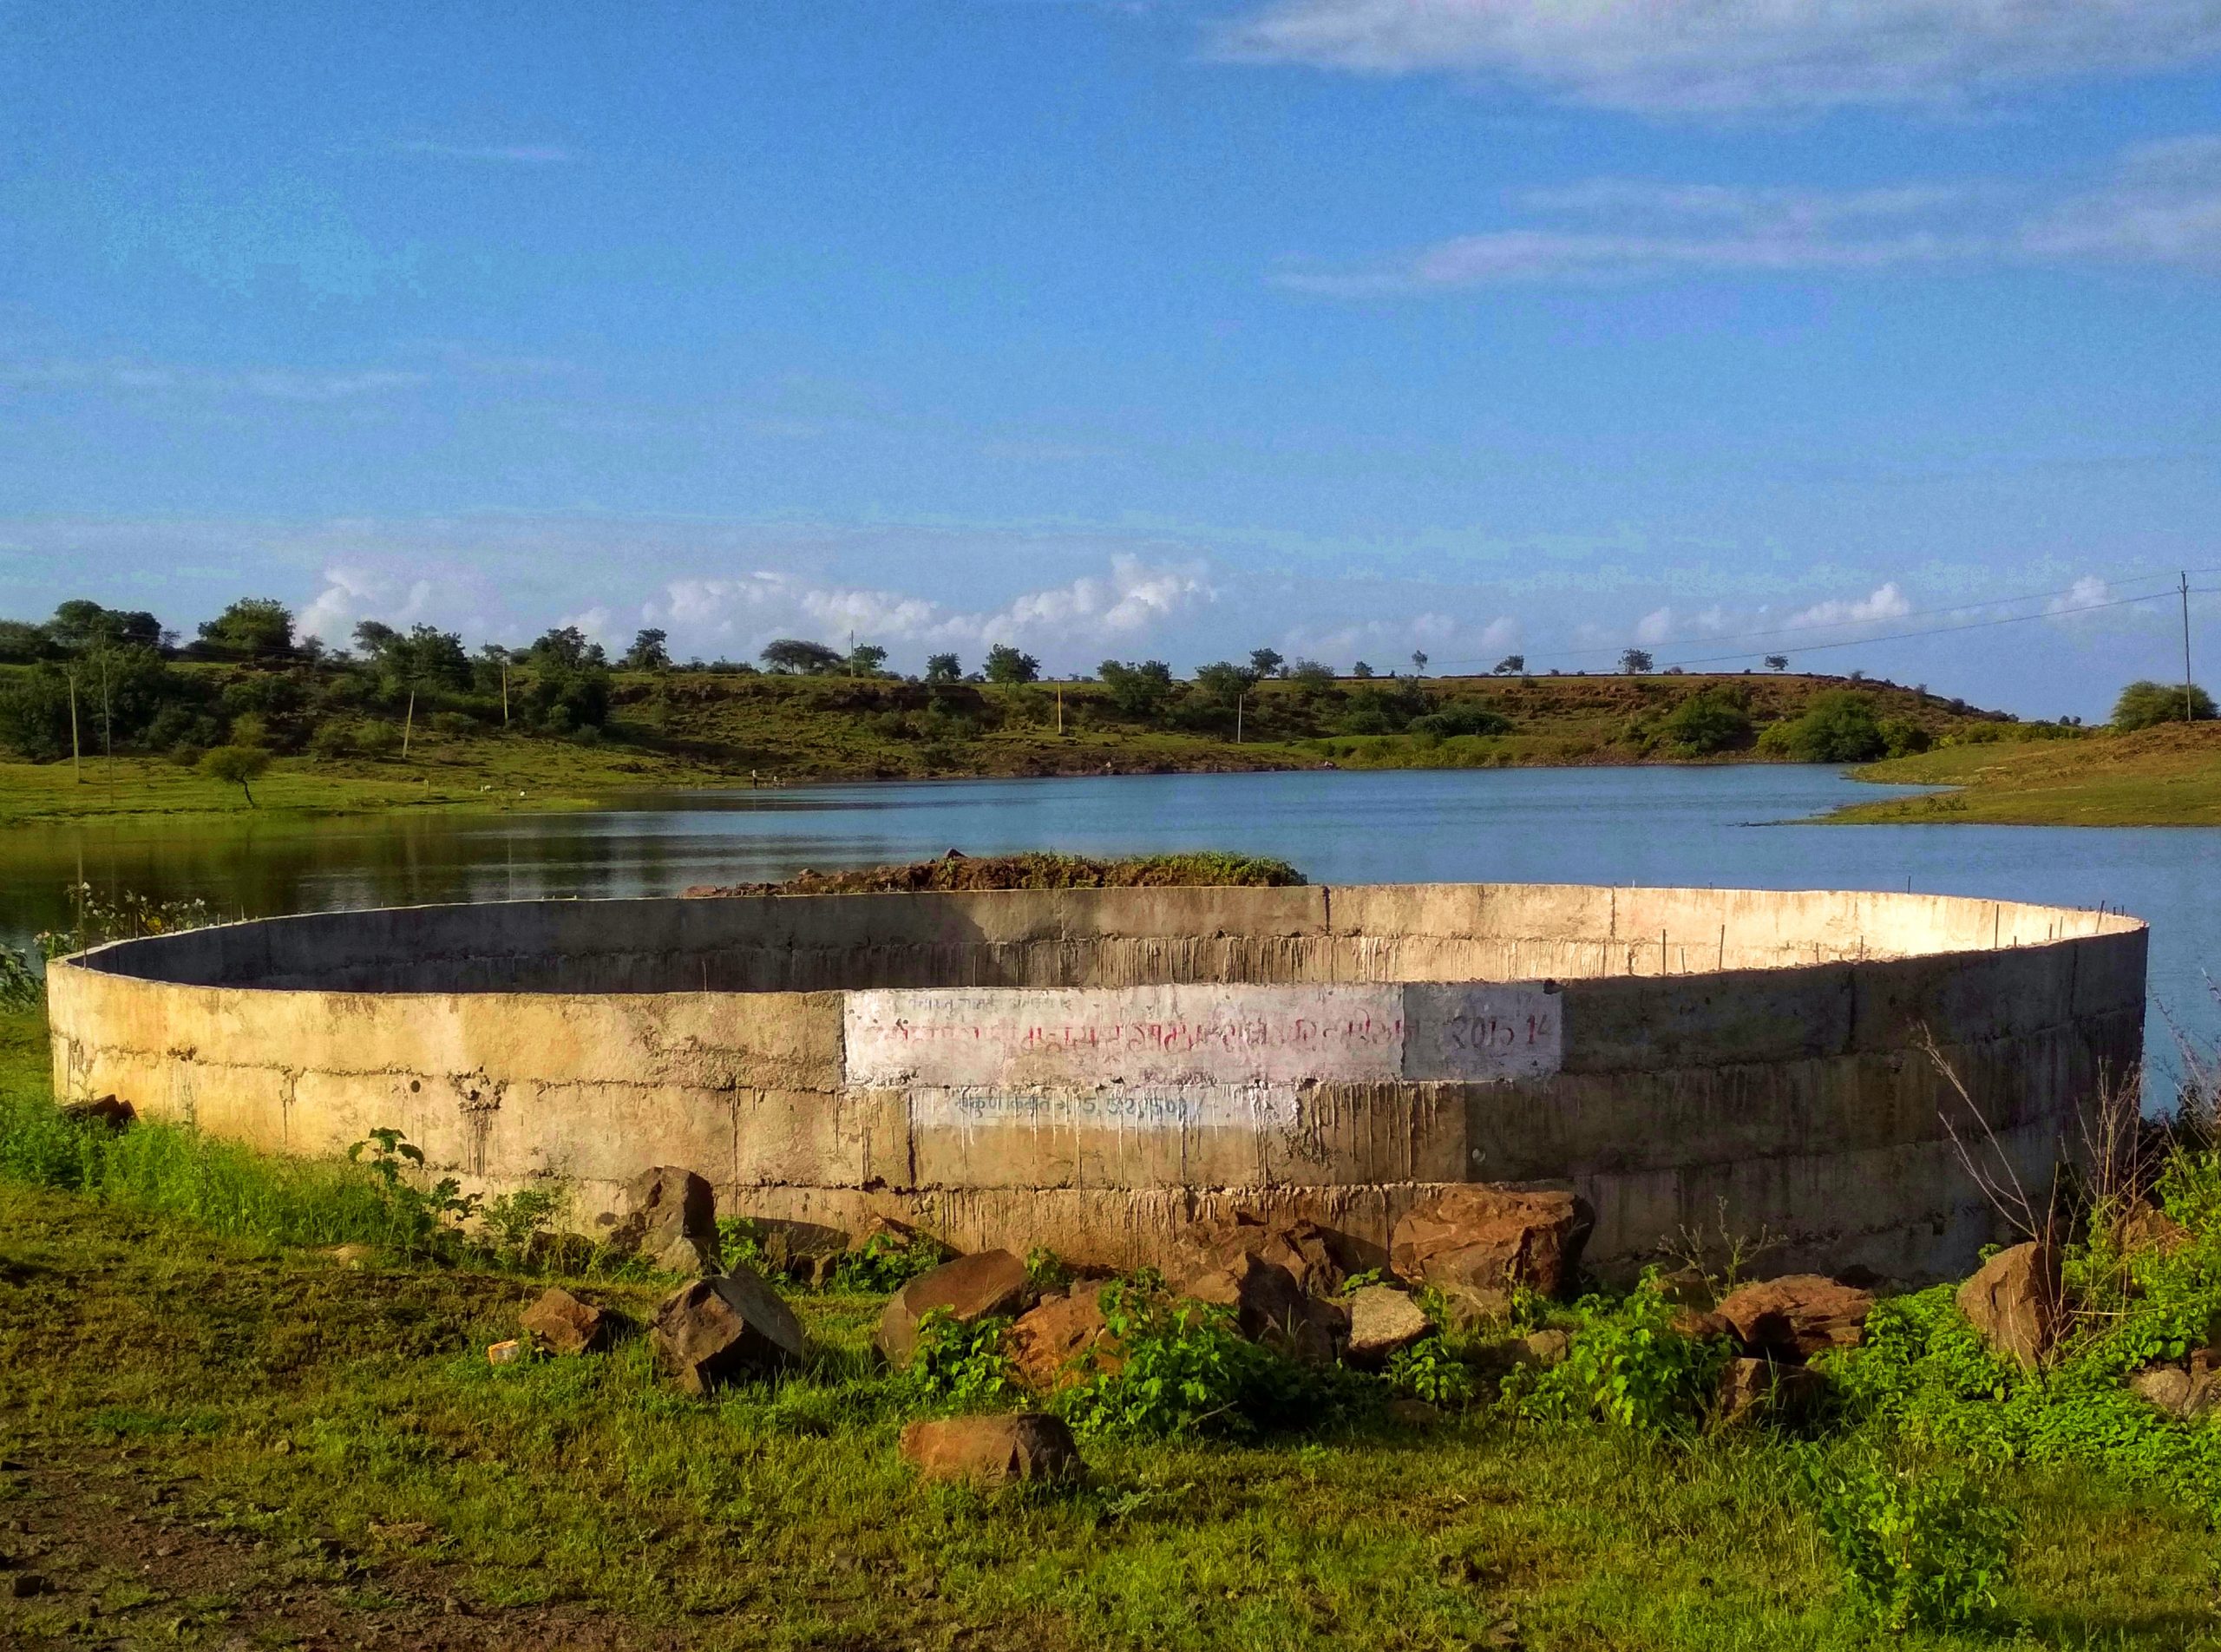 A tank near a water resource